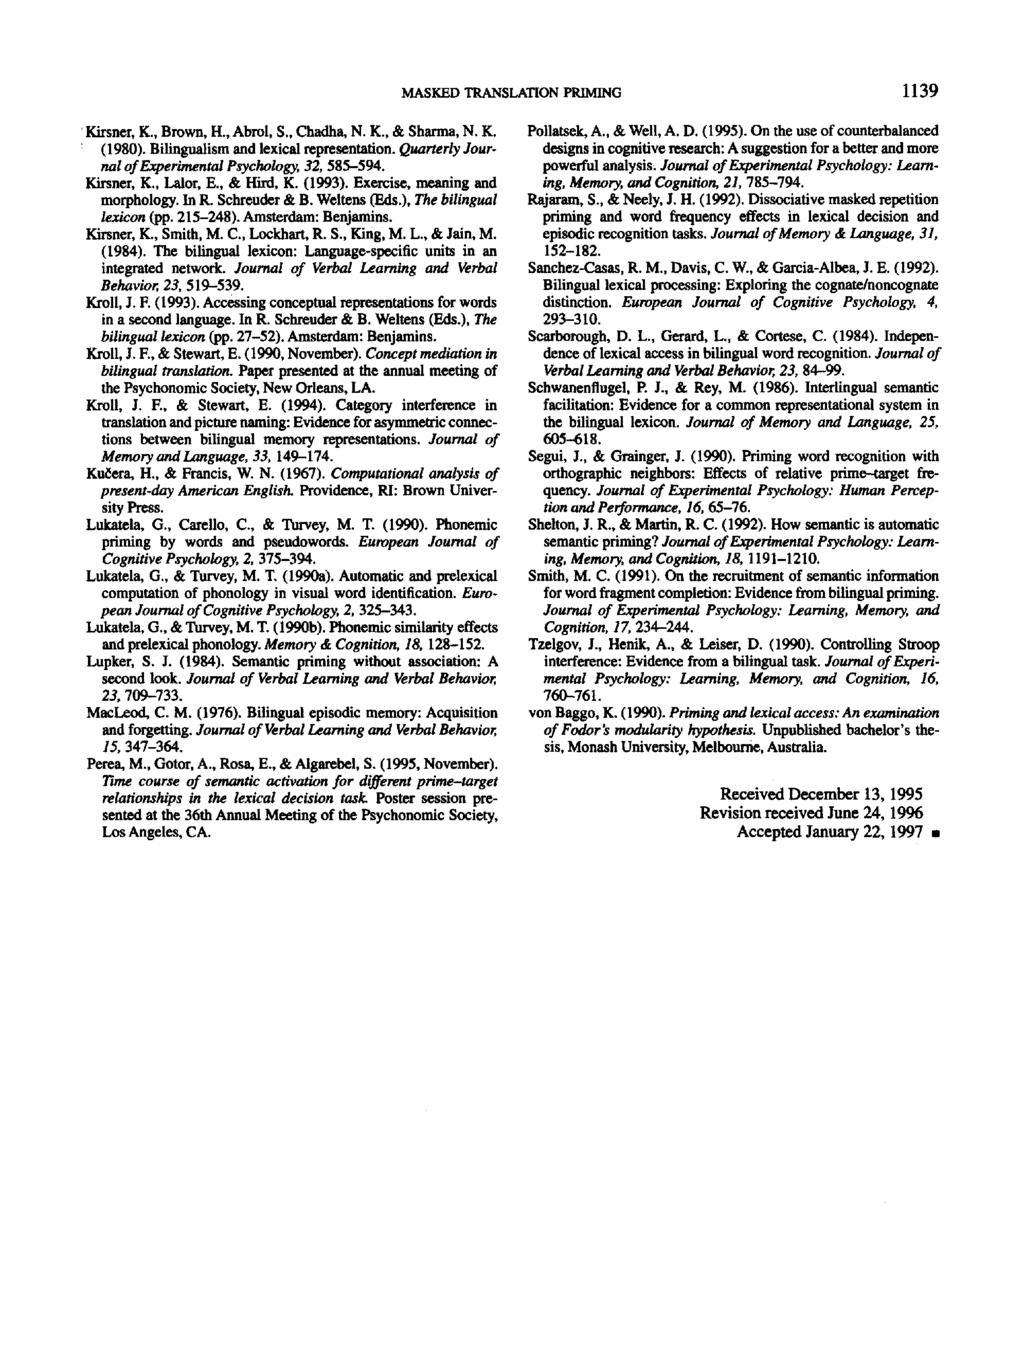 ASKED TRANSLATION PRIING 1139 Kirser, K., Brow, H., Abrol, S., Chadha, N. K., & Sharma, N. K. (1980). Biligualism ad lexical represetatio. Quarterly Joural of Experimetal Psychology, 32, 585-594.